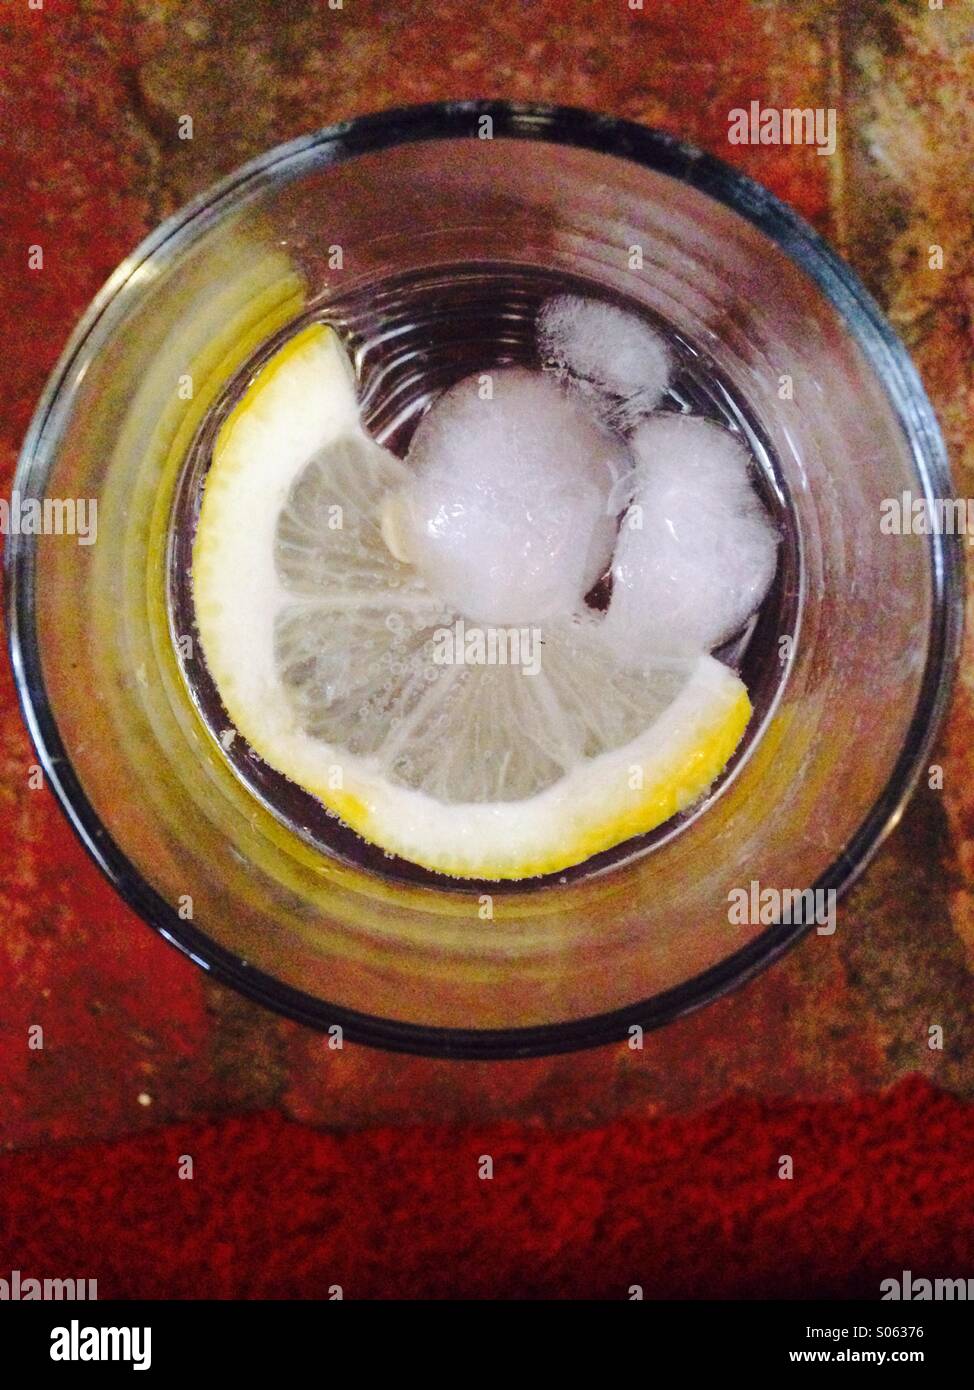 Ice and lemon drink Stock Photo